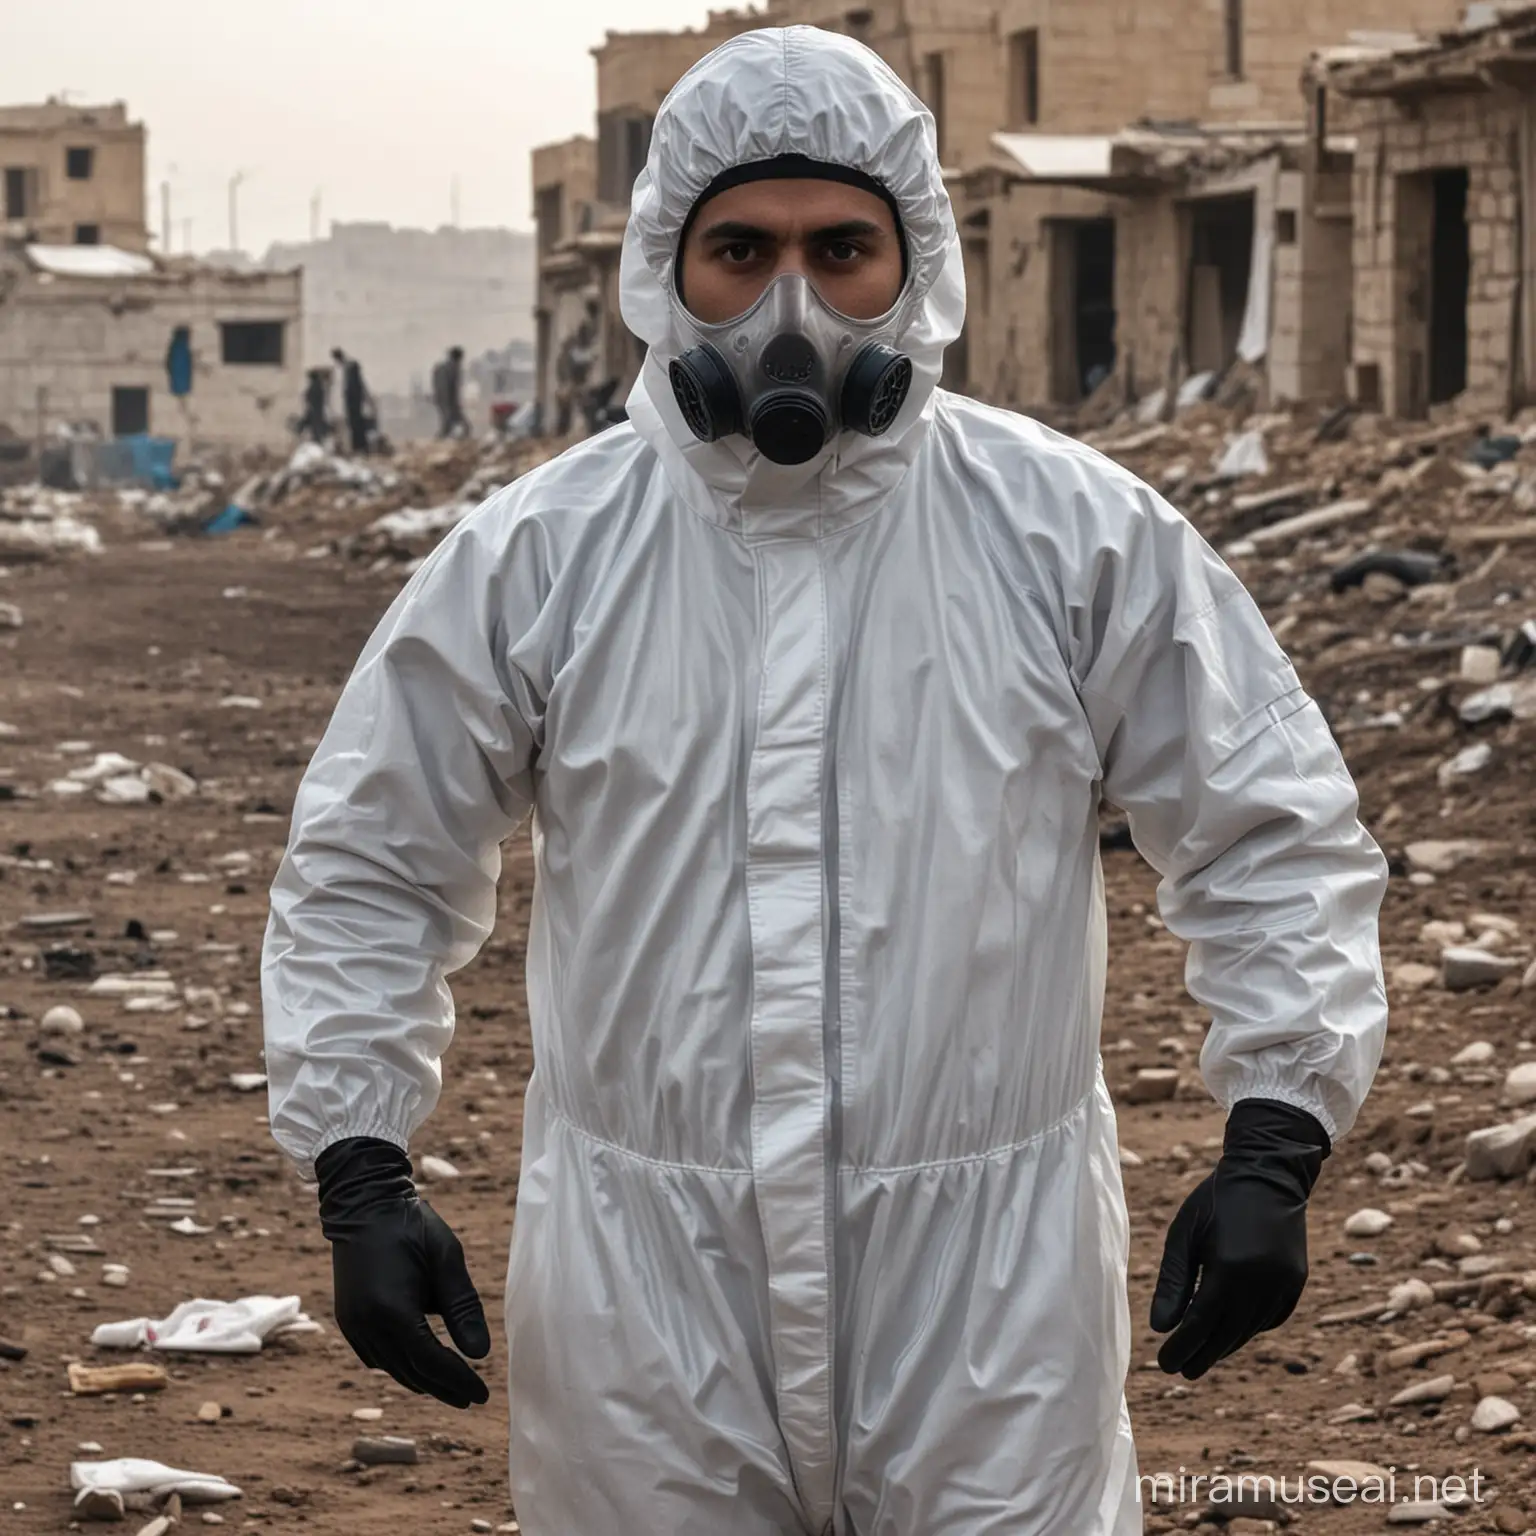 Syrian Man in Hazmat Suit Amidst Urban Devastation